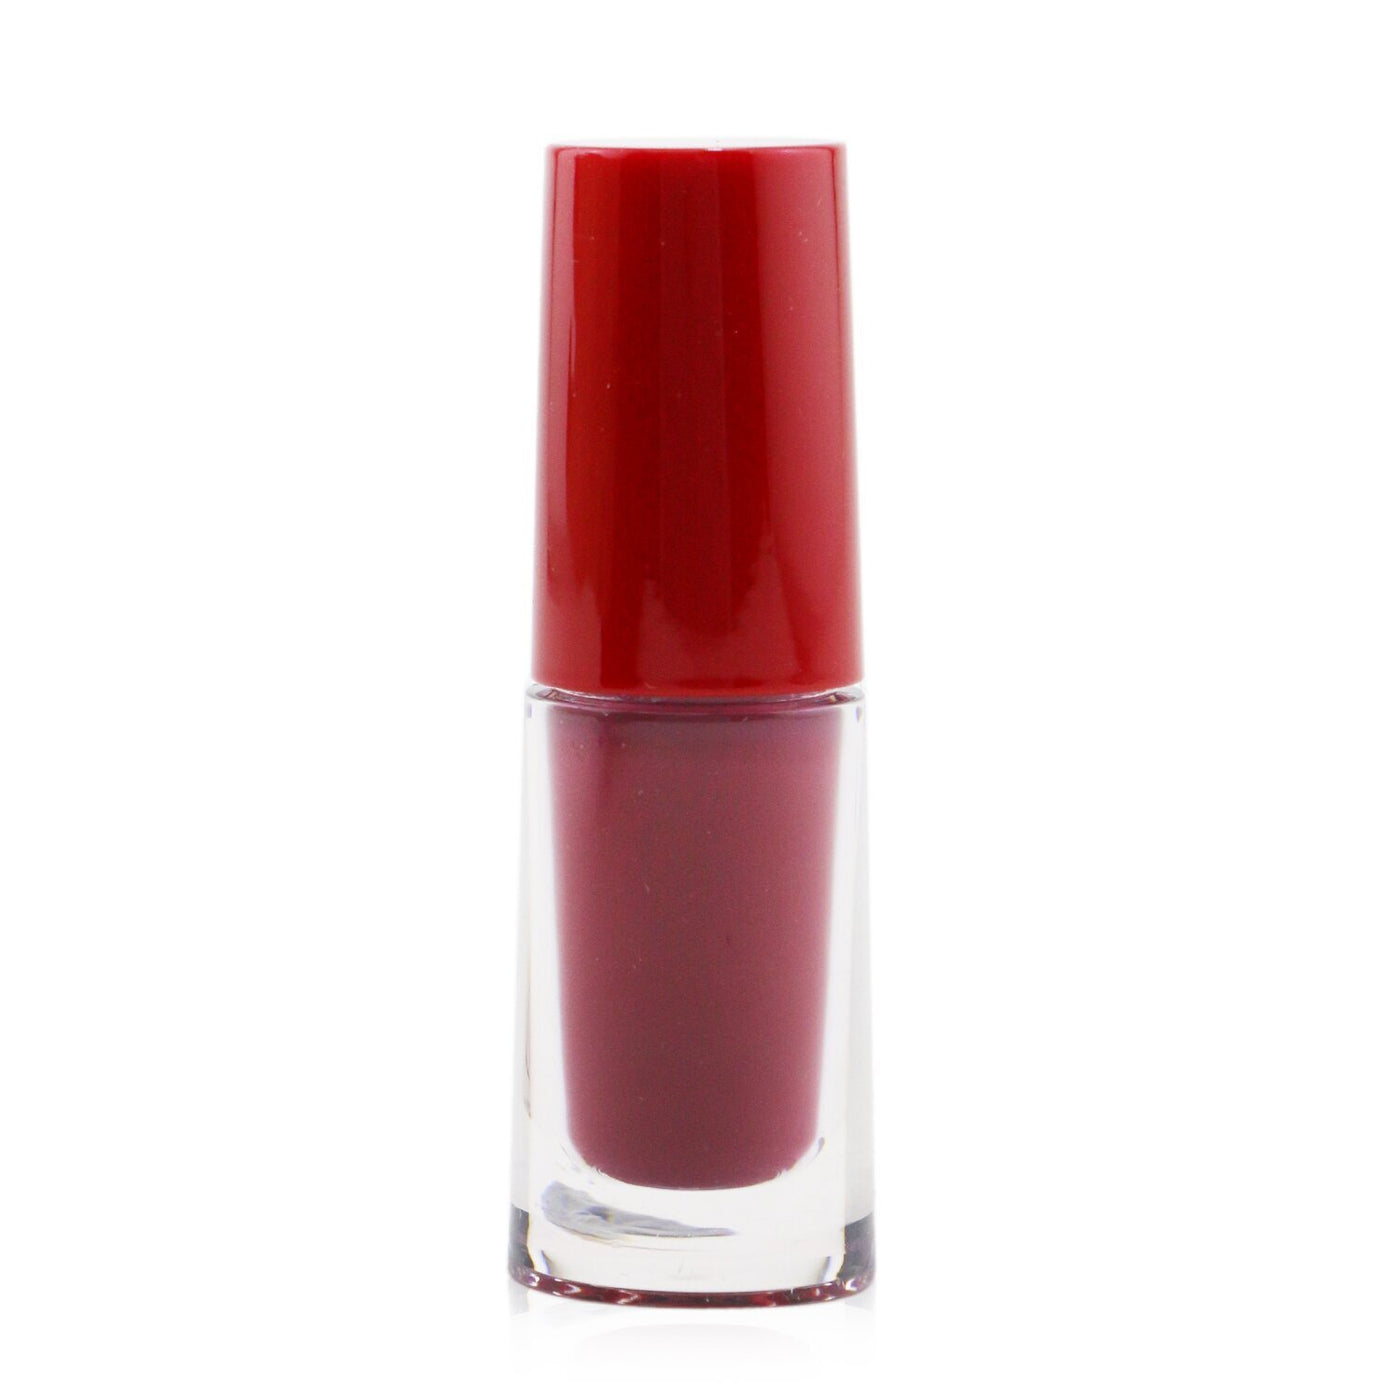 ARMANI Lip Magnet Second Skin Intense Matte Color 3.9ml # 600 Front-Row